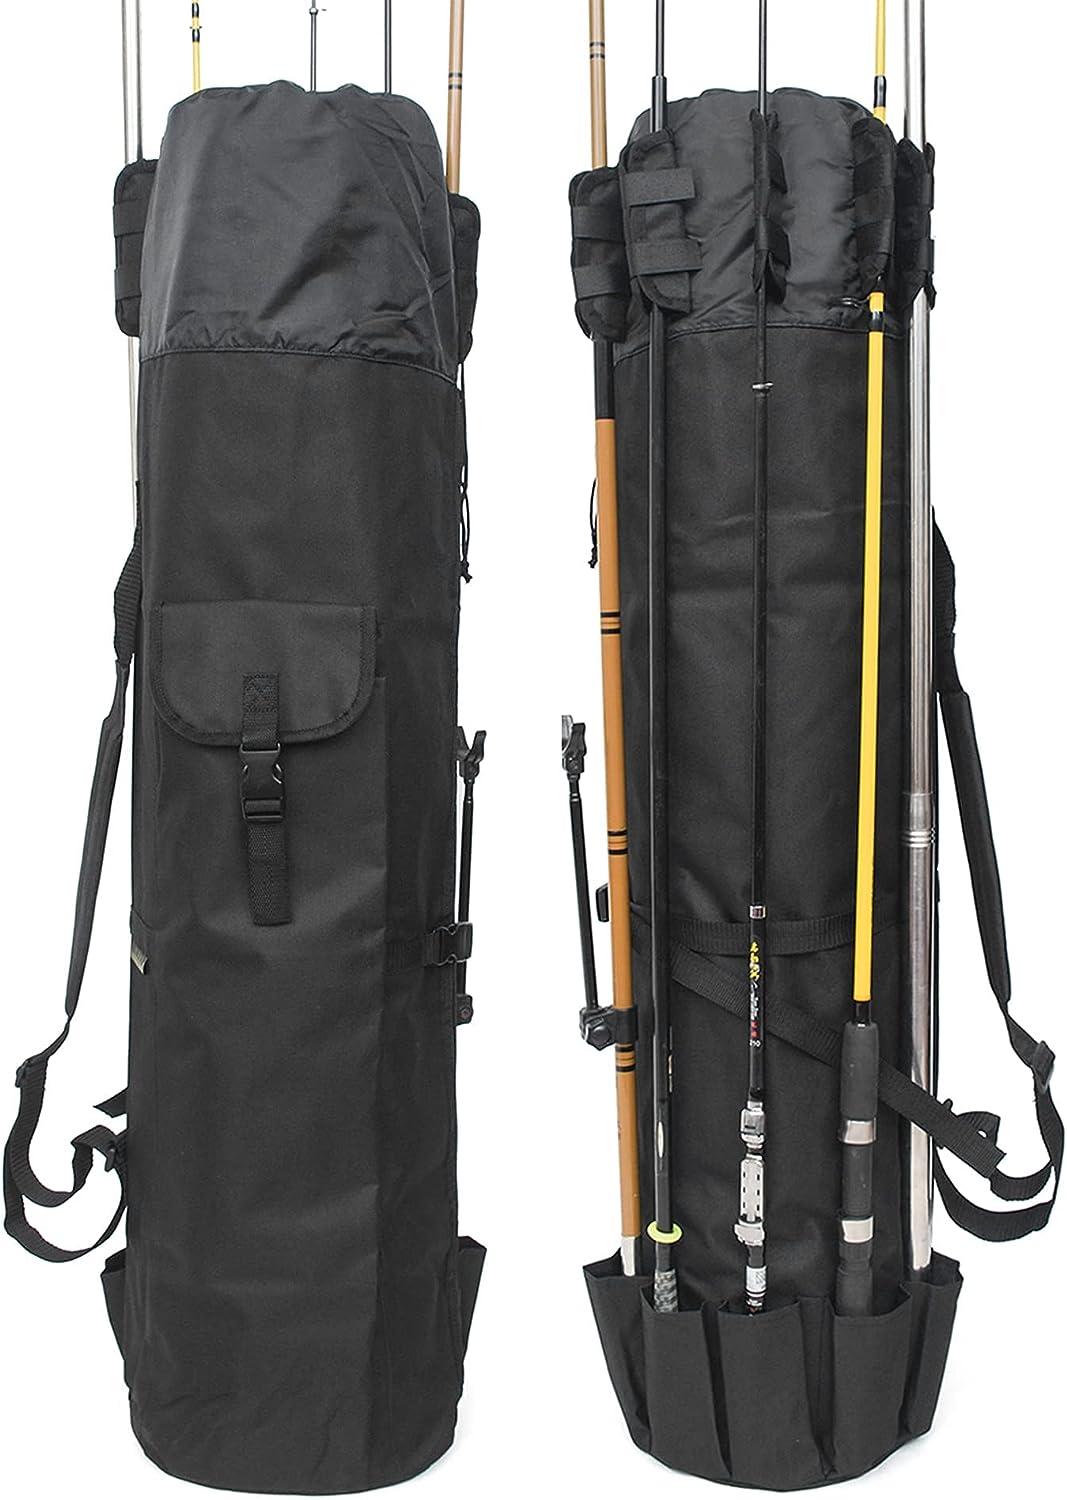 mydays Fishing Rod Bag,Fishing Reel Case,Pole Storage Bag Tackle